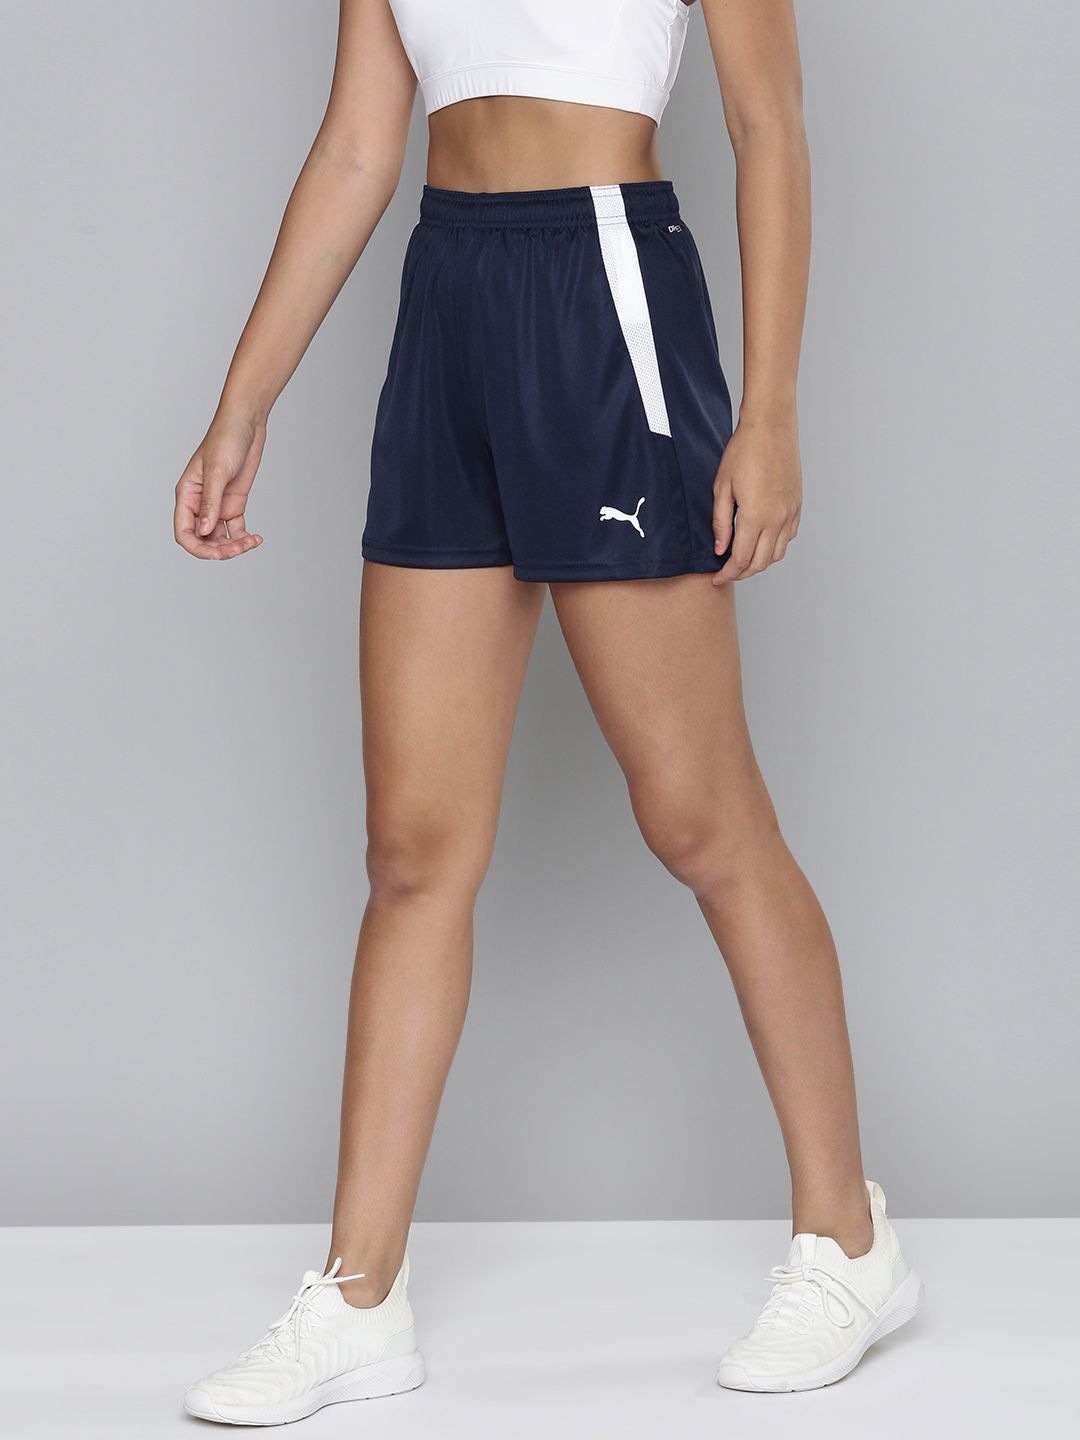 Puma Women Navy Blue Football Sports Shorts Price in India